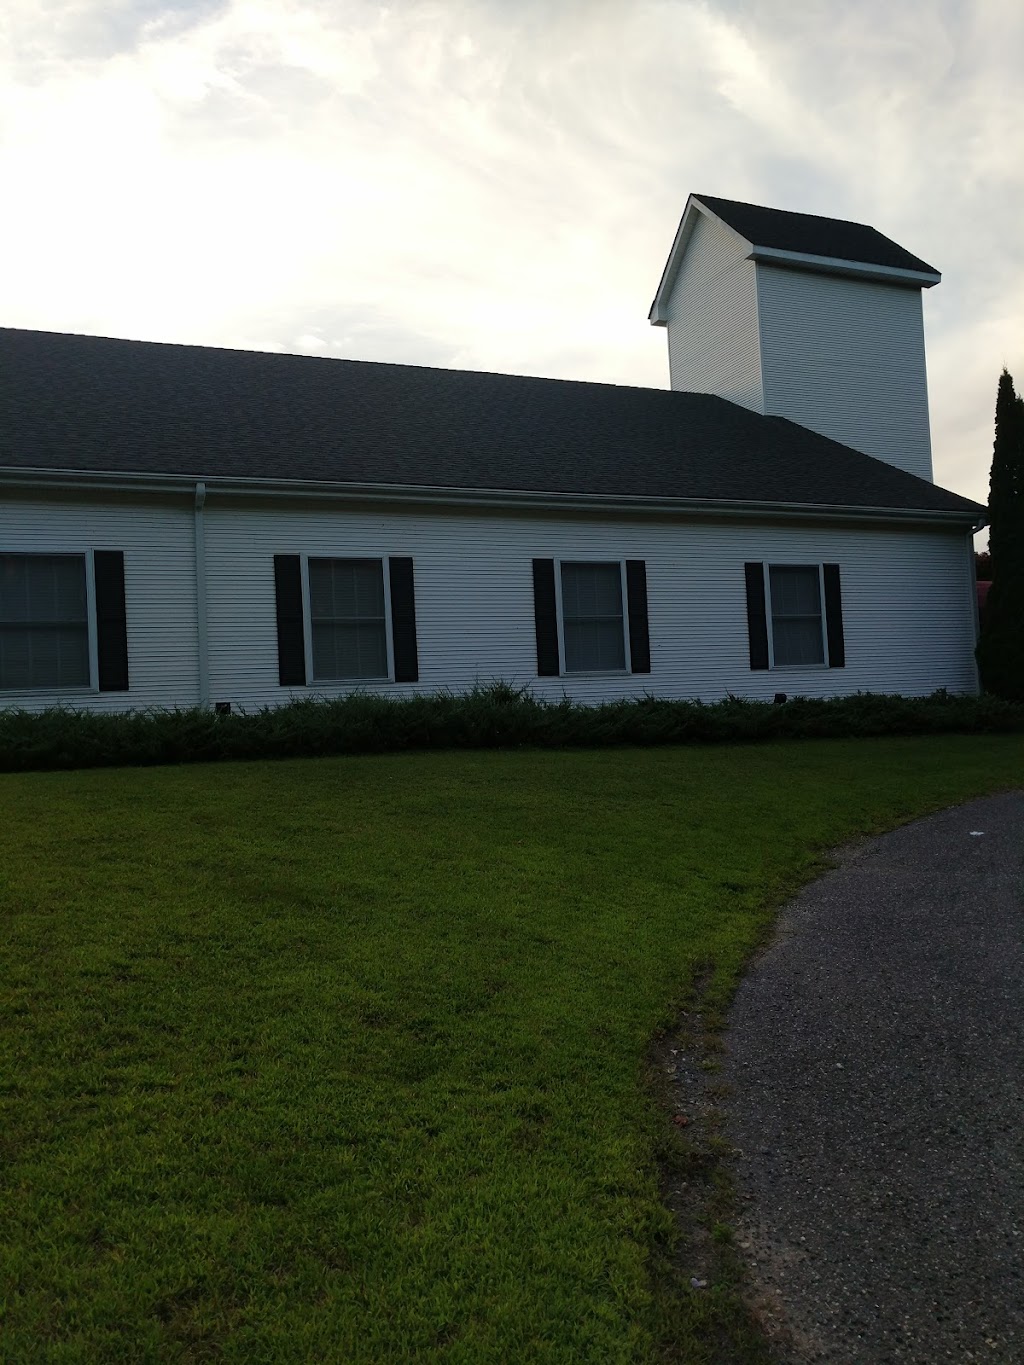 Friendship Baptist Church | 441 Torrington Rd, Litchfield, CT 06759 | Phone: (860) 567-3389